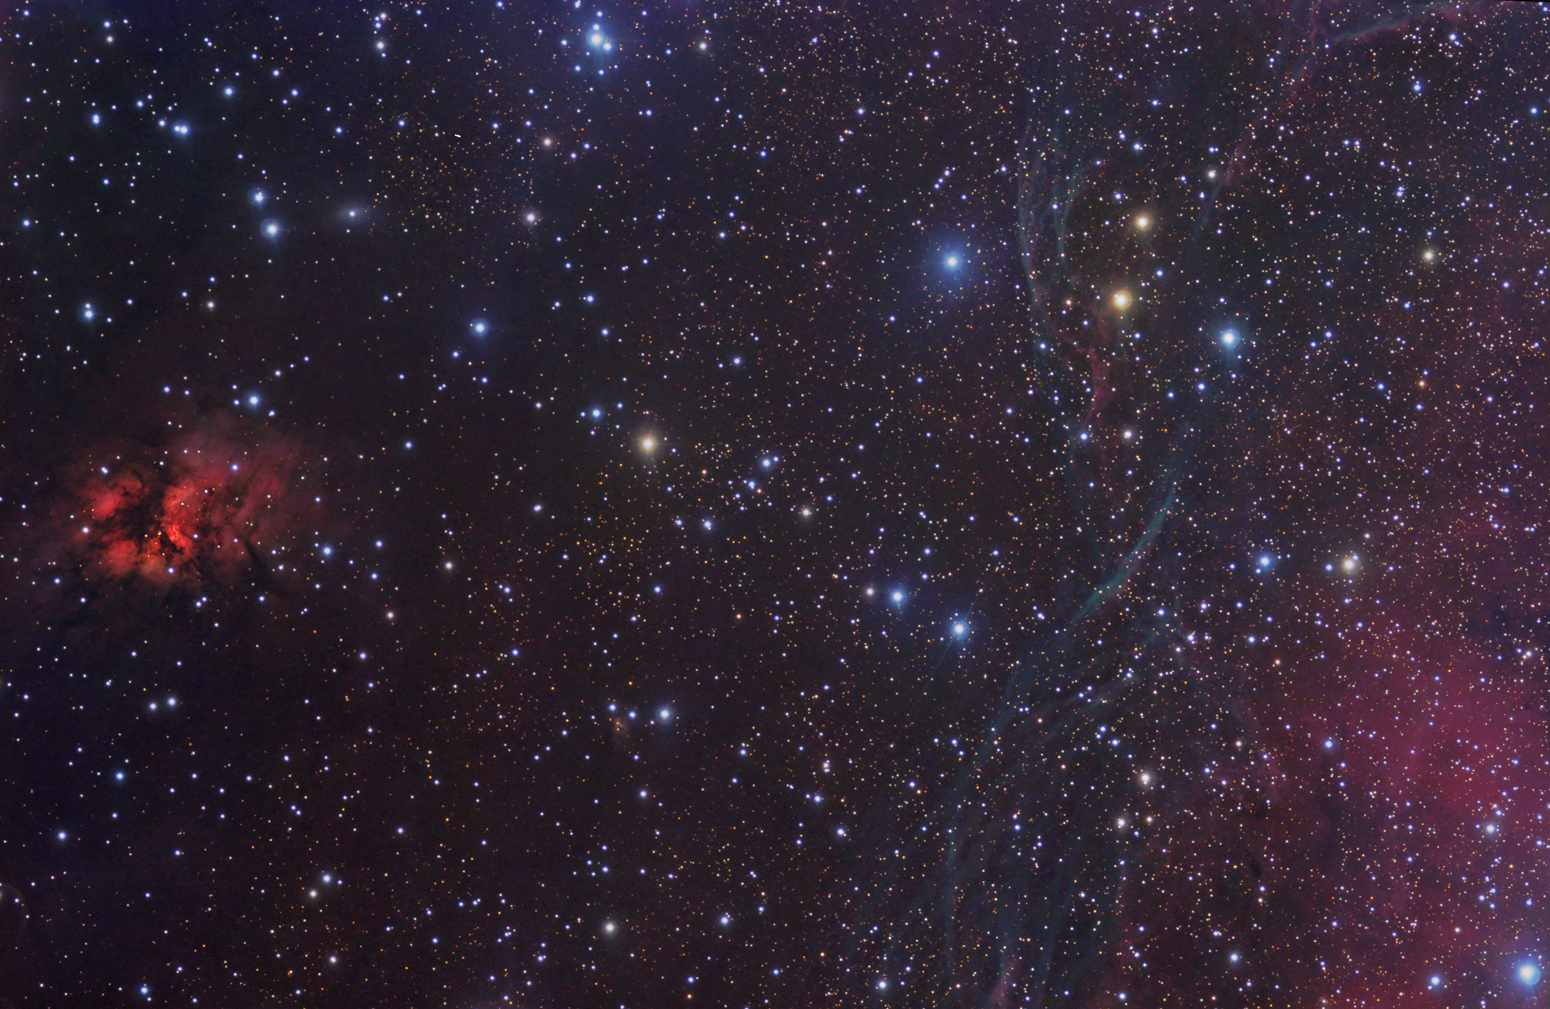 Part of the Vela Supernova remnant